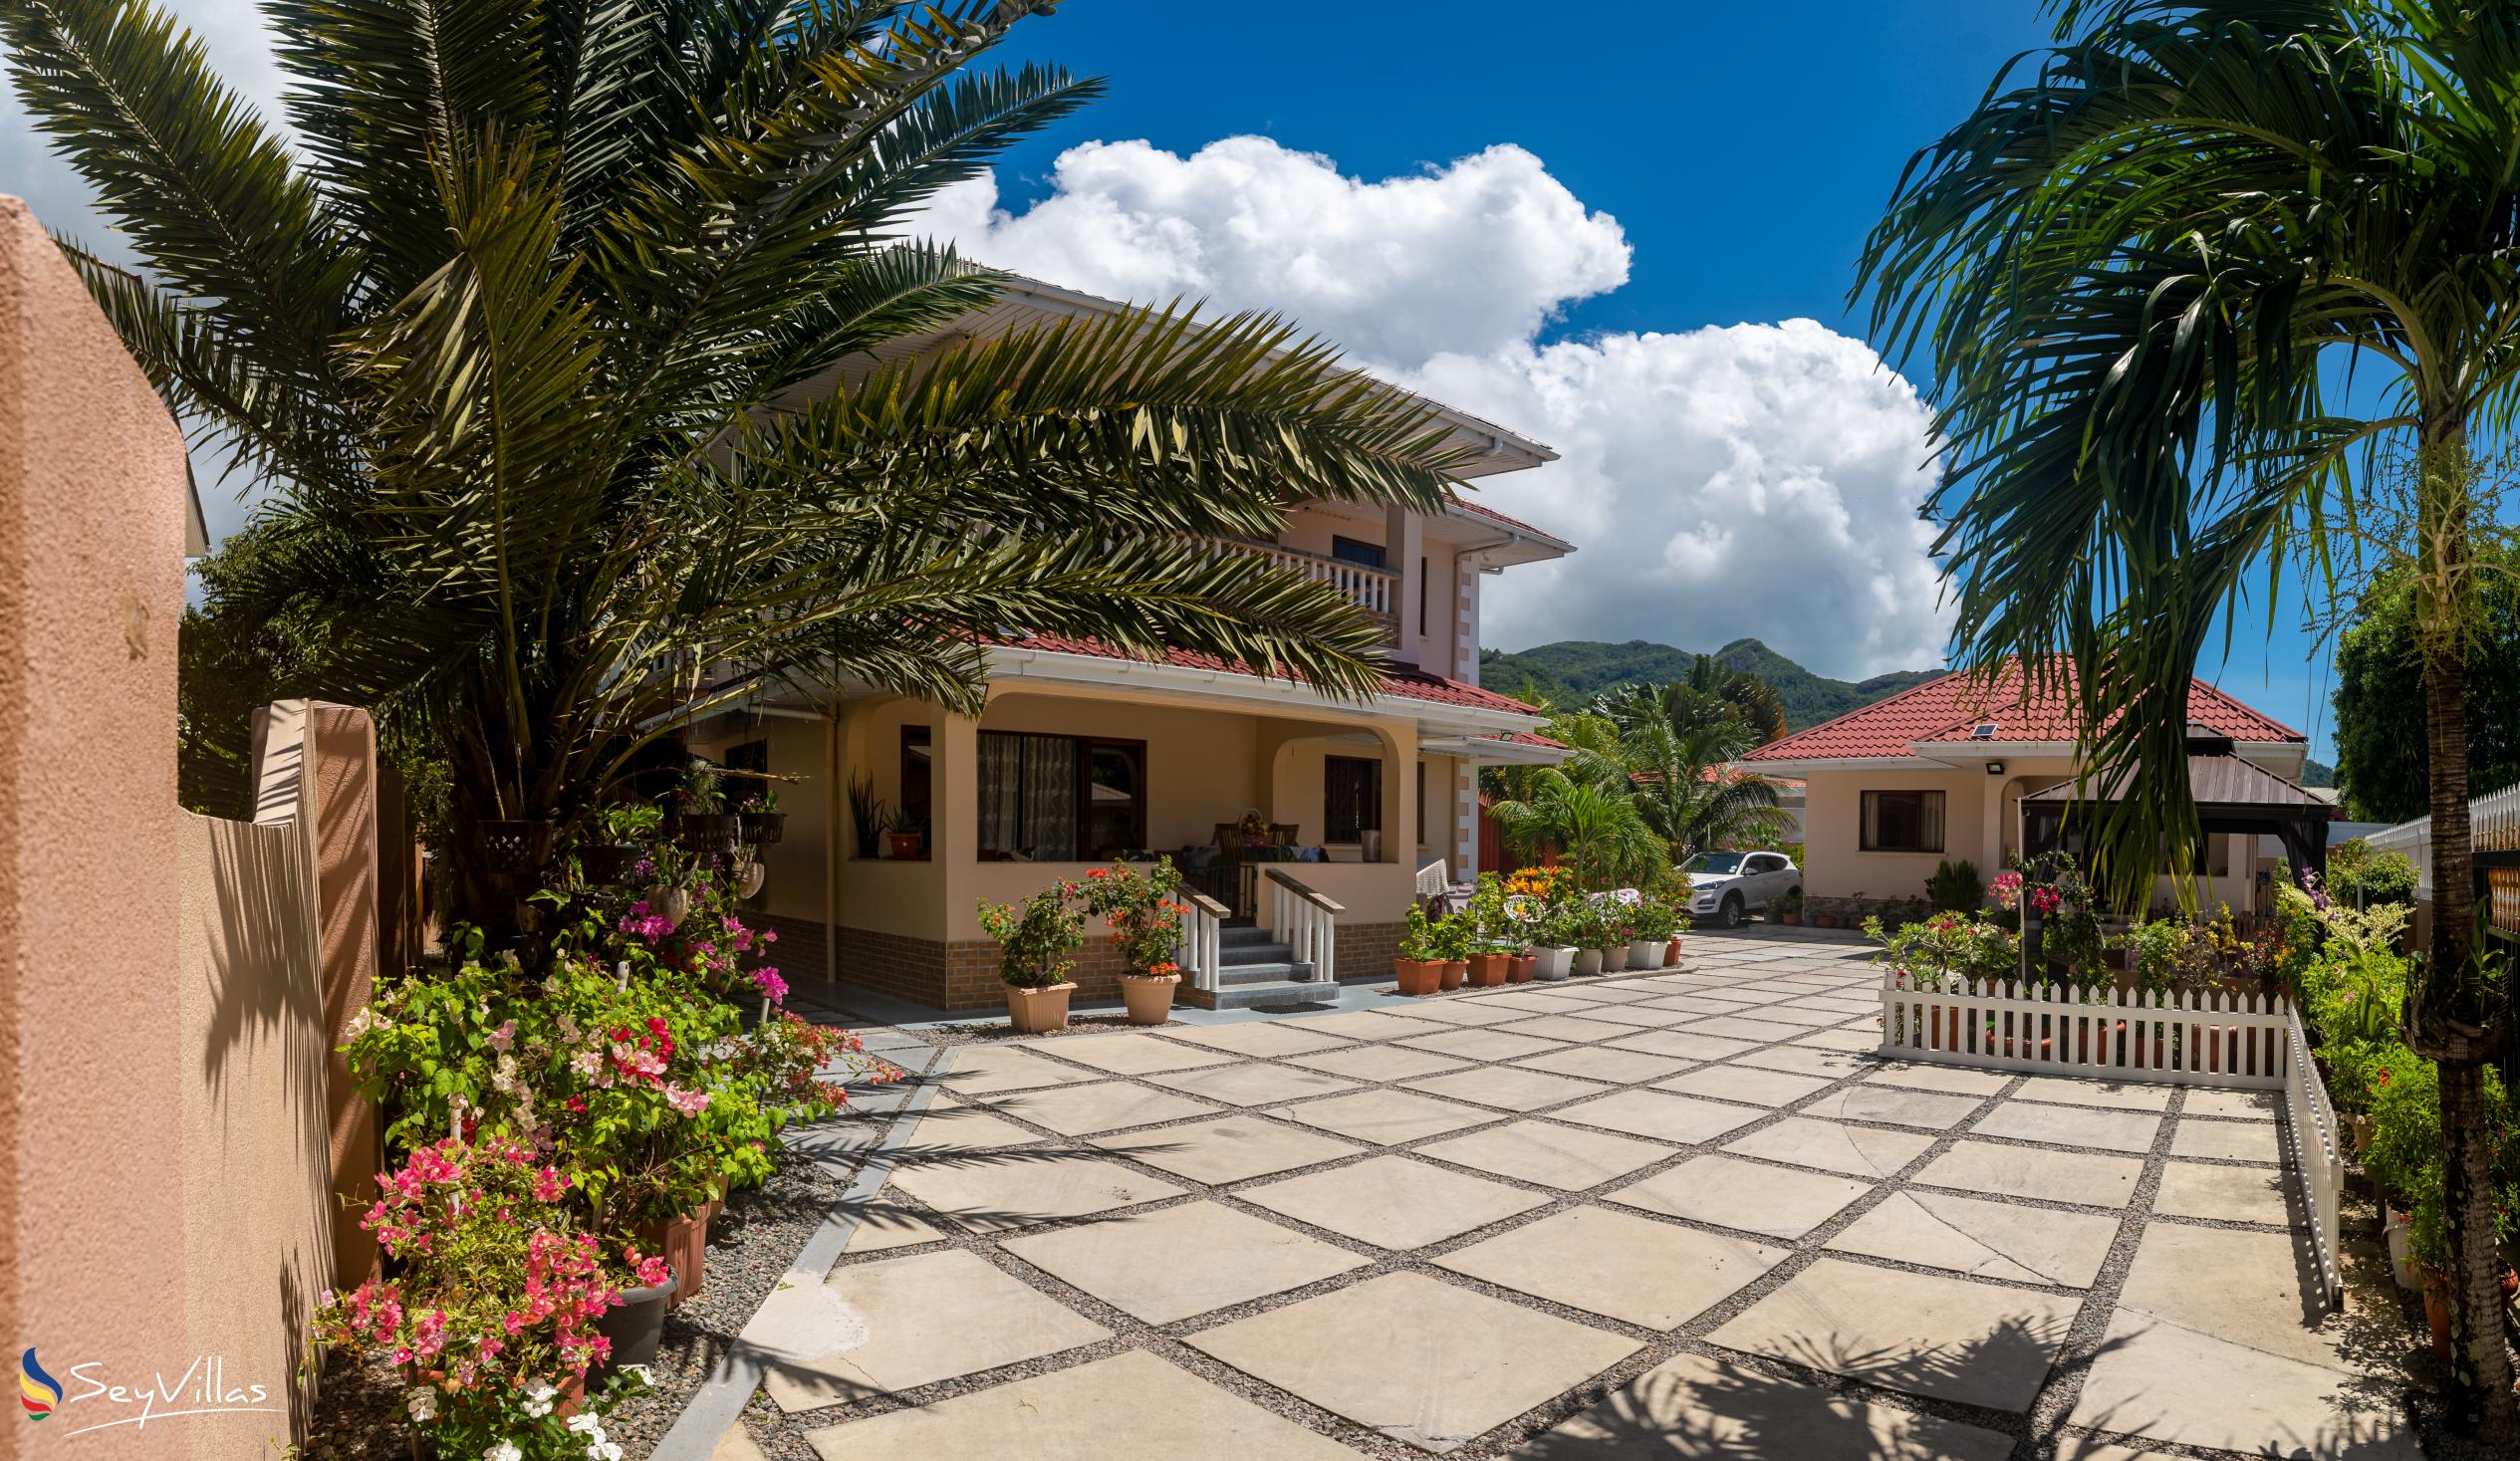 Foto 11: Erica's Residence Self Catering Apartment - Aussenbereich - Mahé (Seychellen)